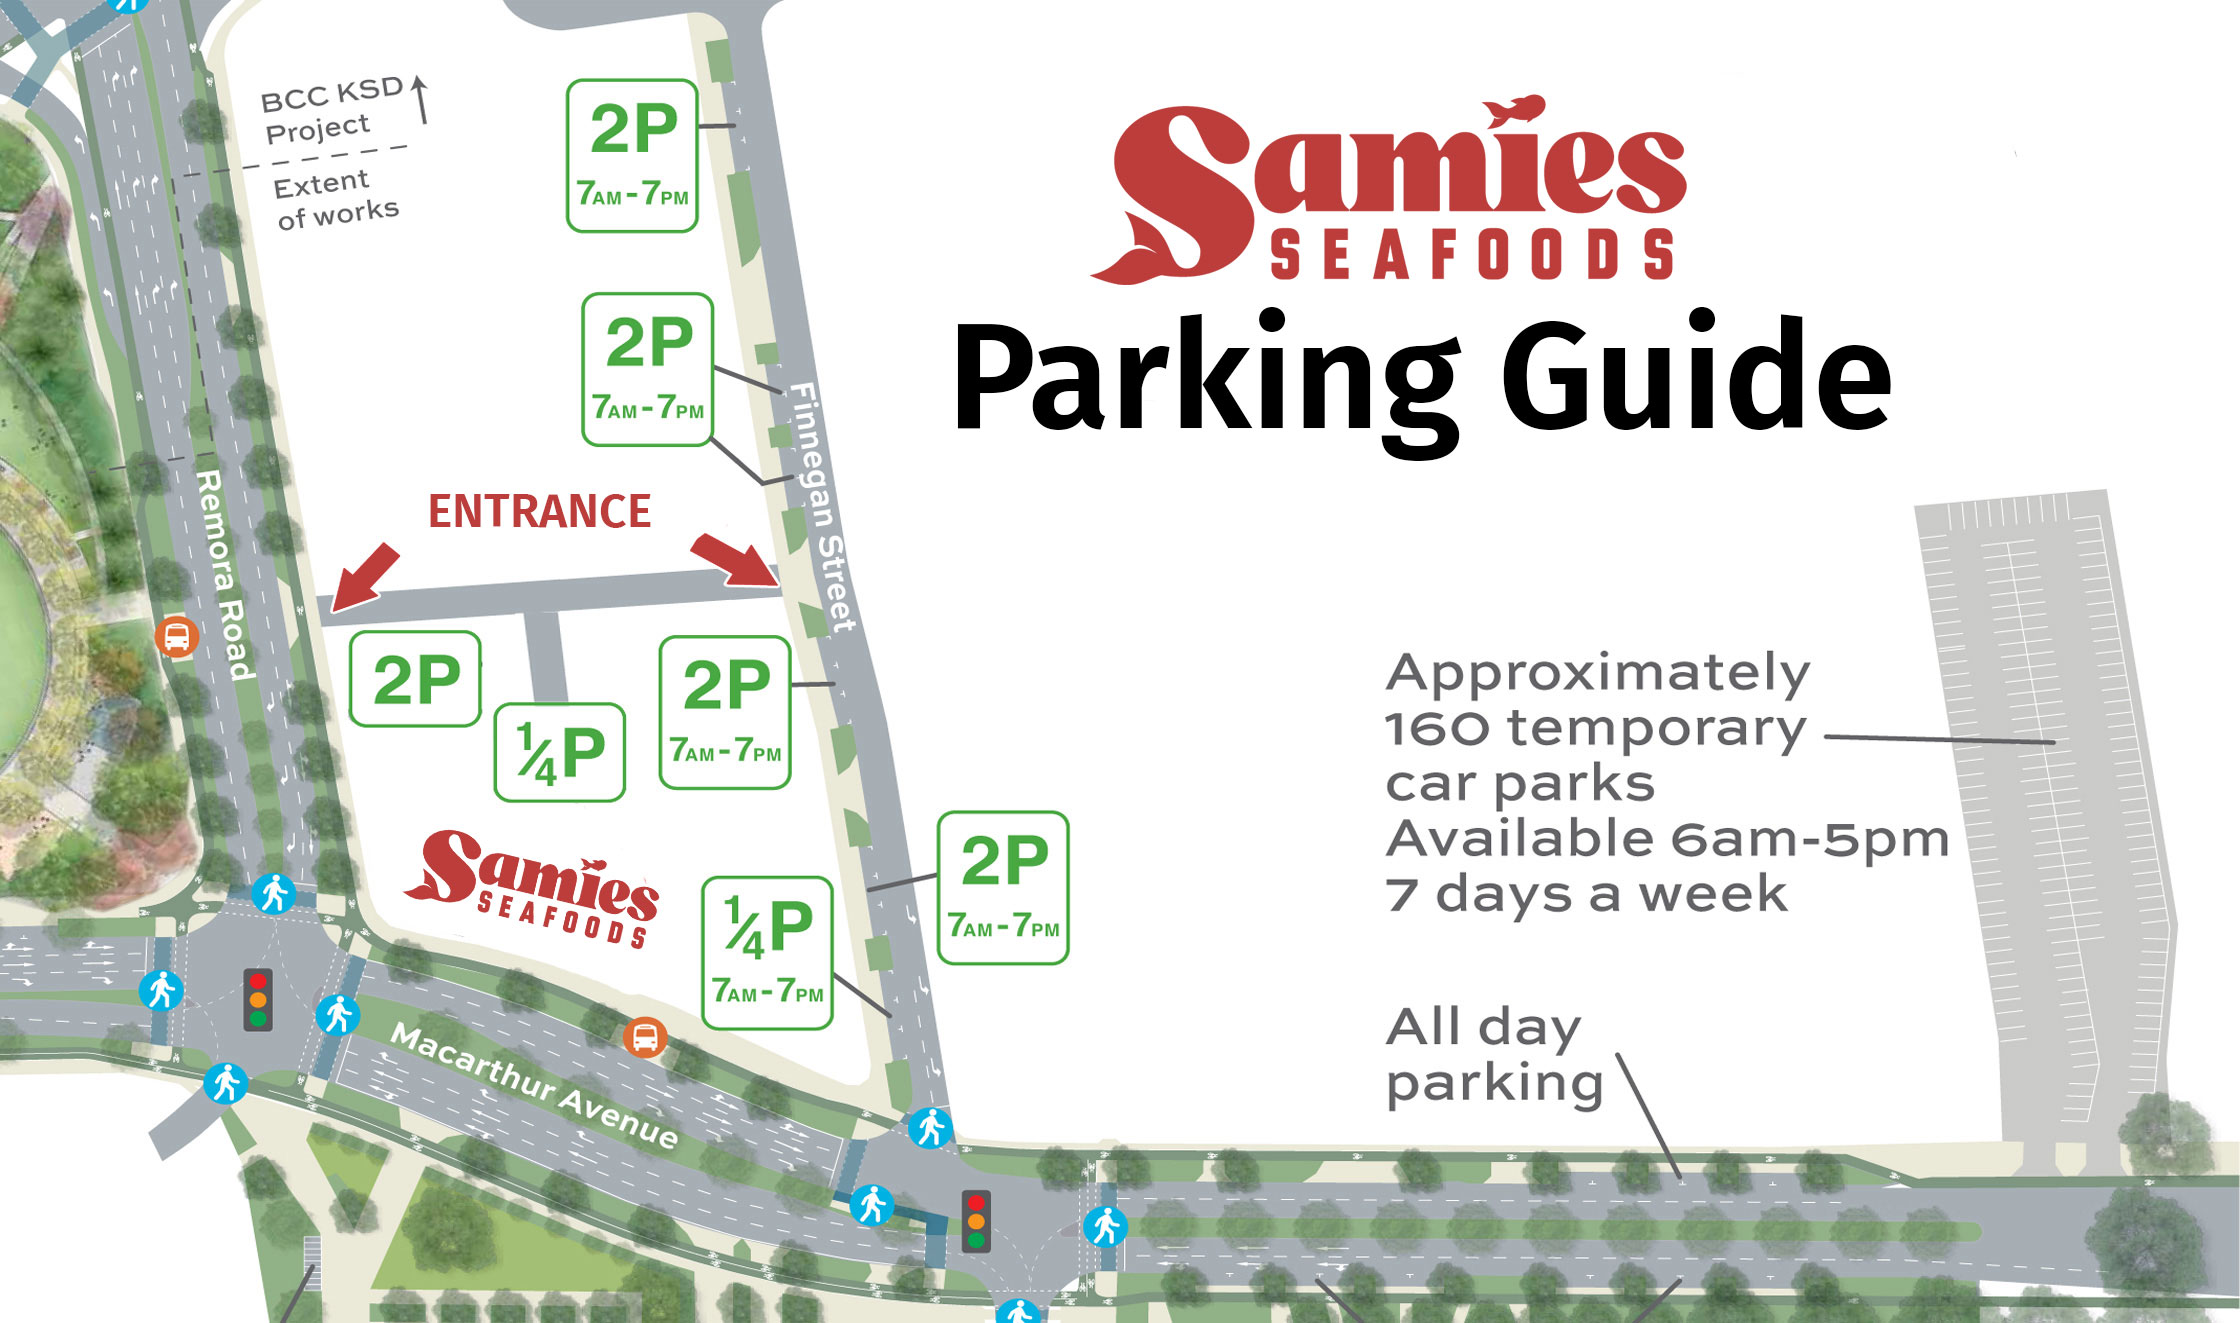 Samies Parking